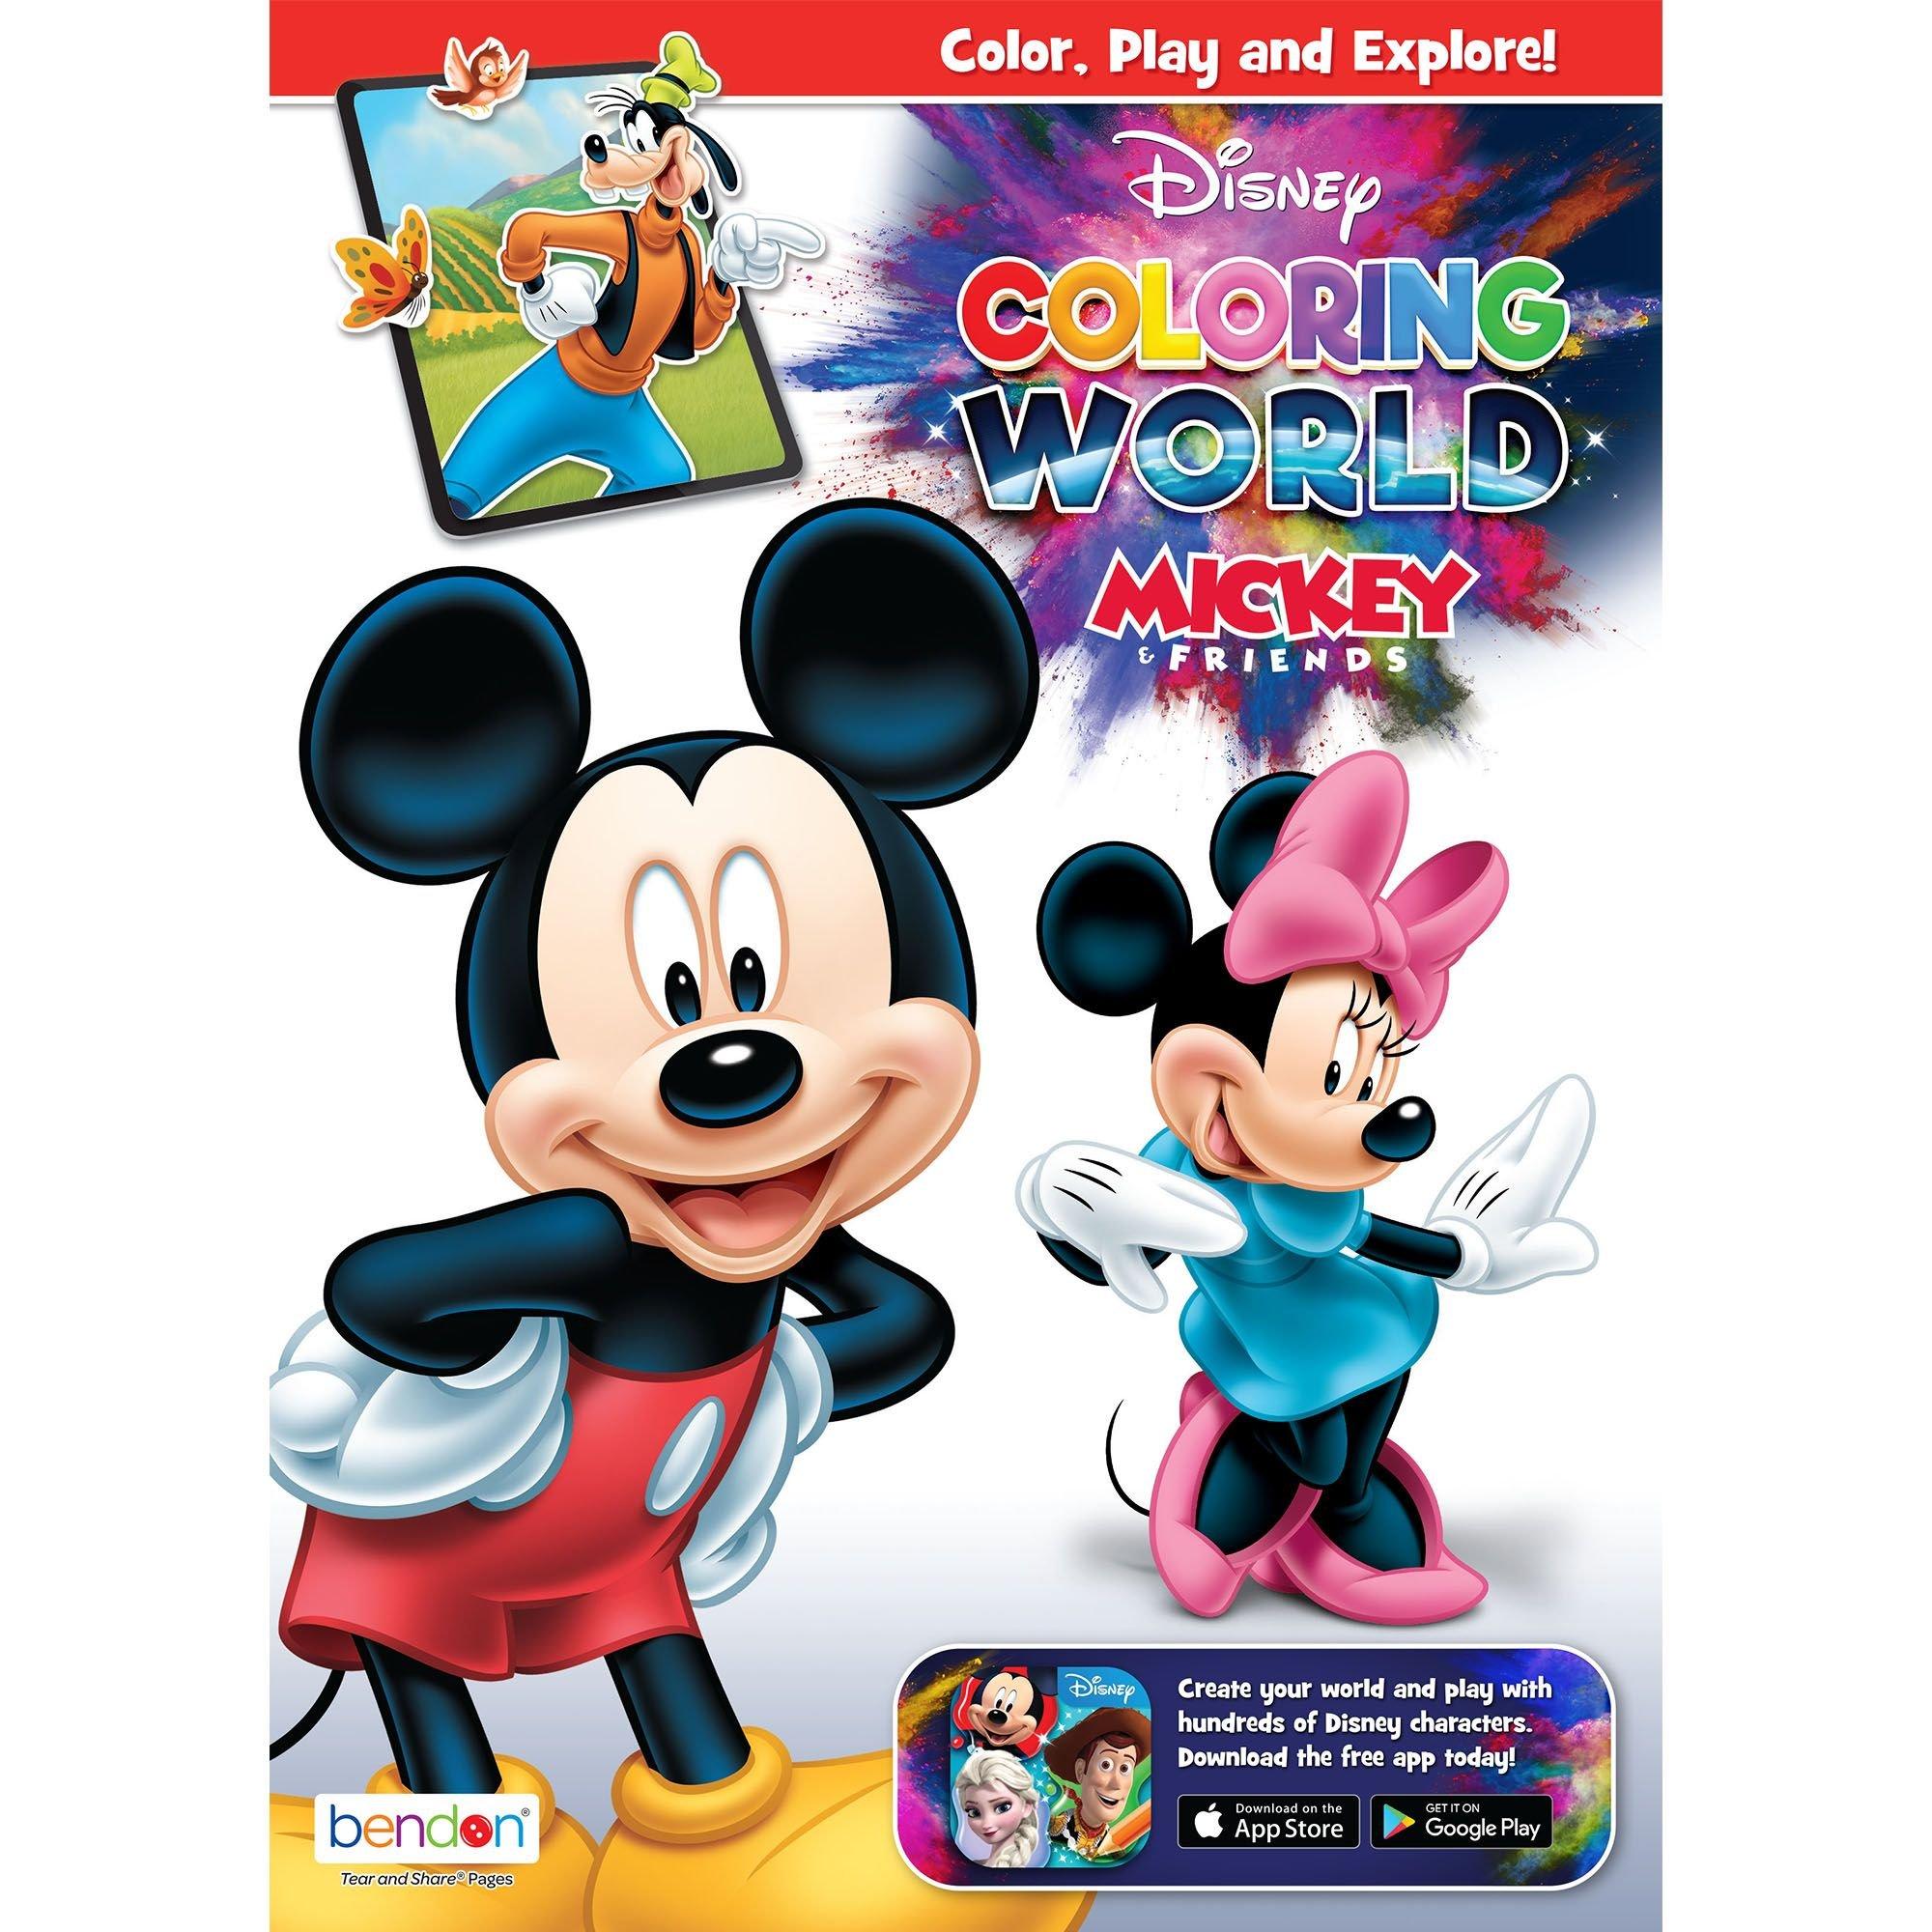 Disney Stickers: Princess - Apps en Google Play